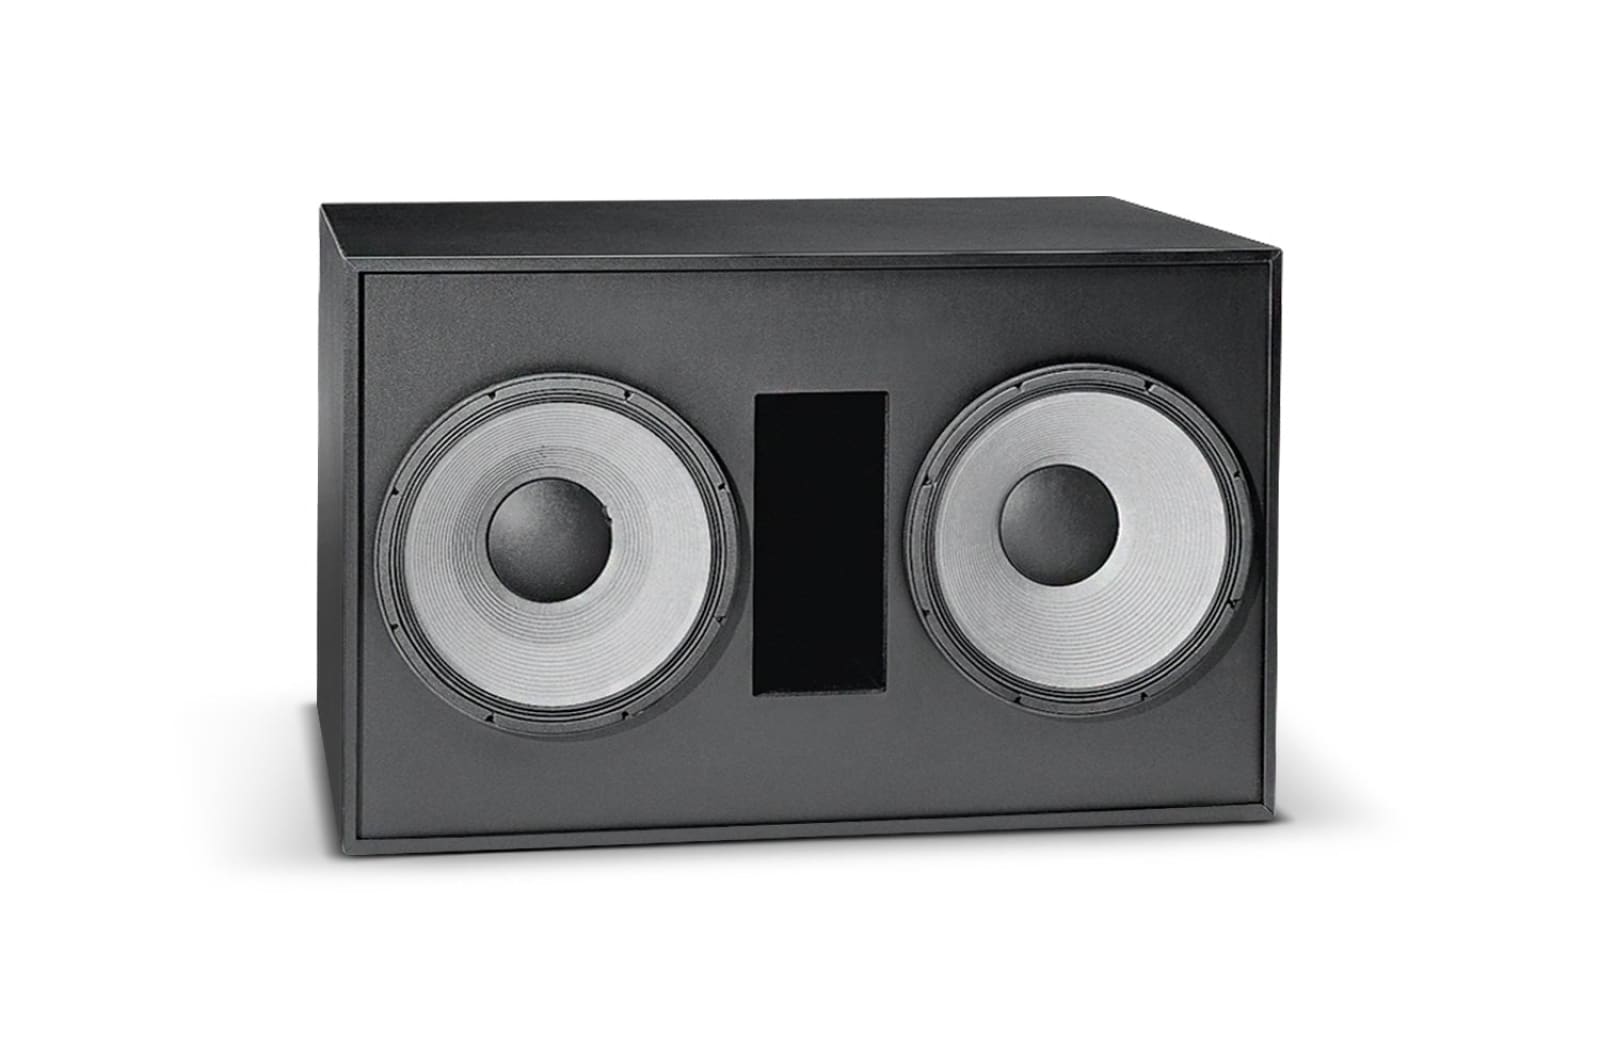 Massive Jbl Professional 6.2 Home Theater Speaker System - New! Speakers